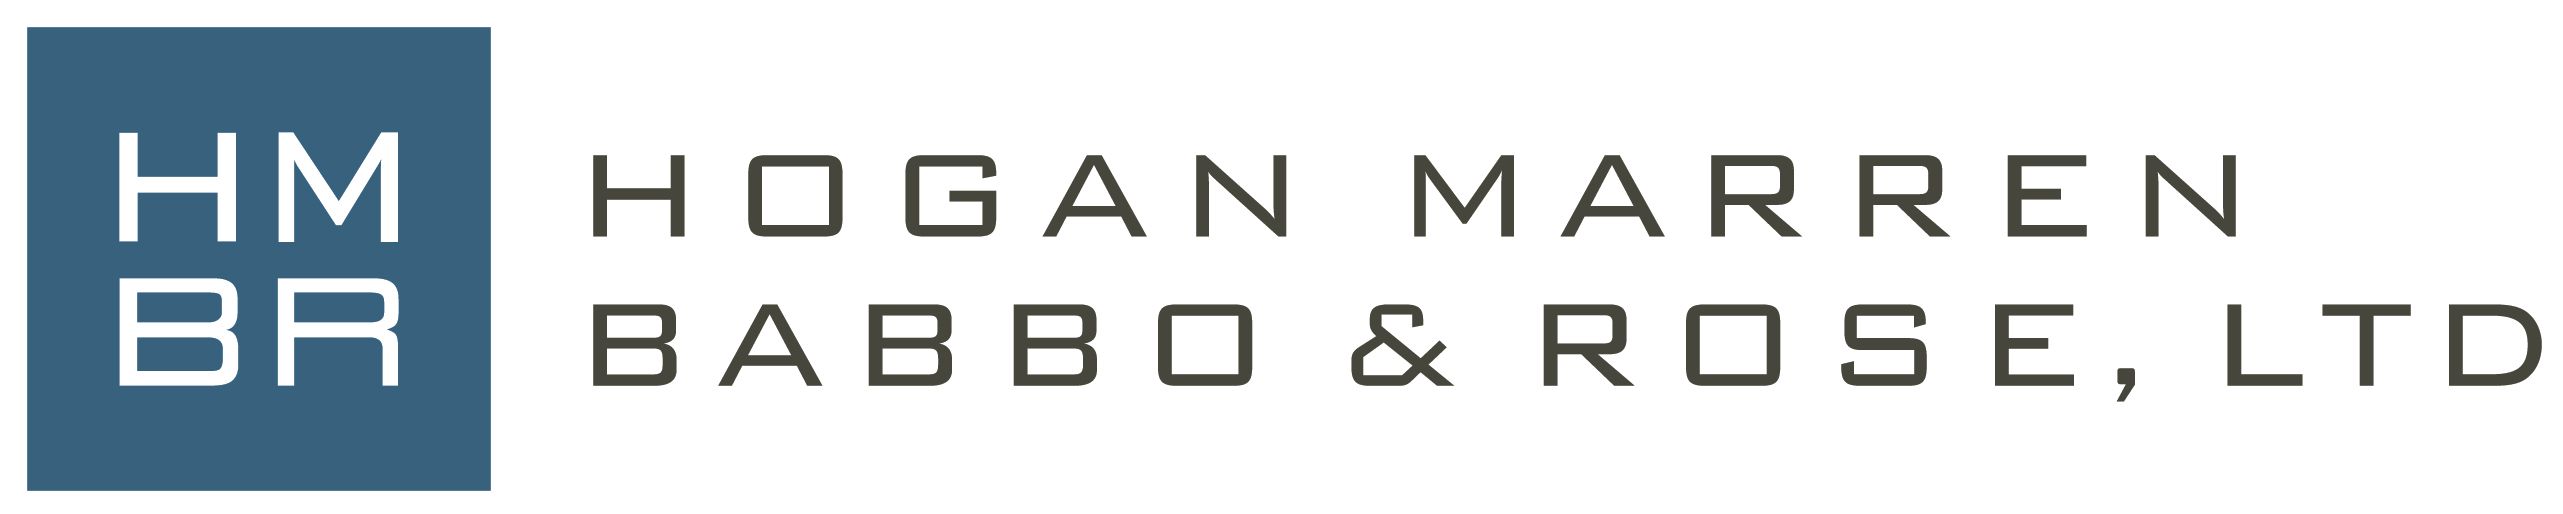 Hogan Marren Babbo & Rose, Ltd law firm logo